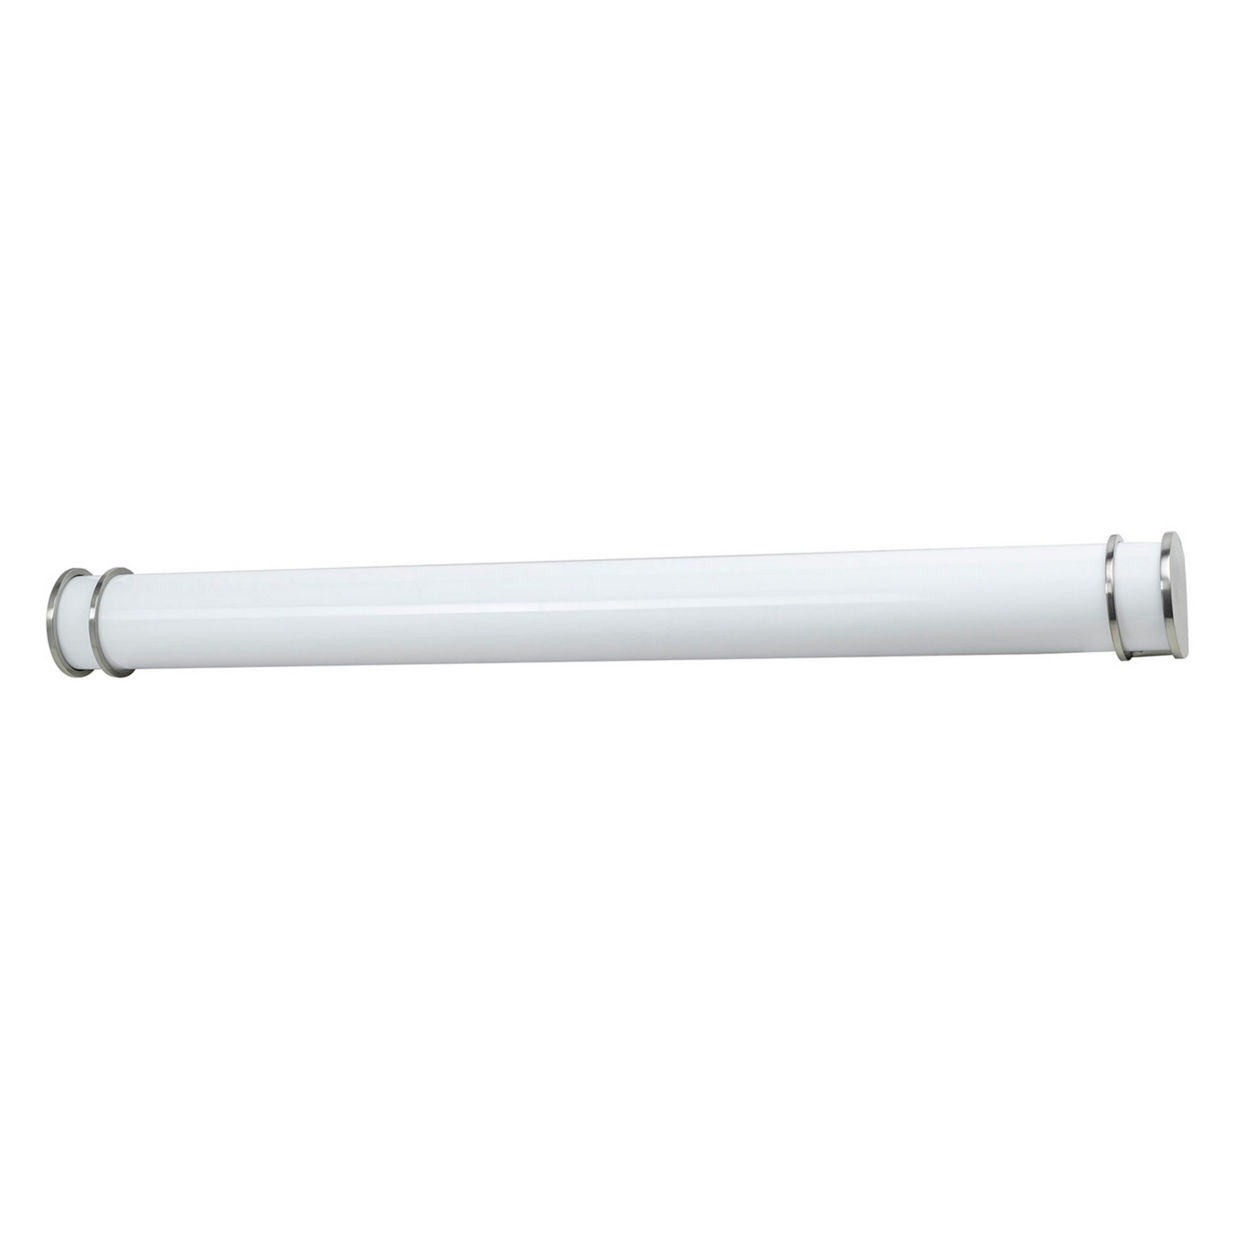 Pipe Design Metal Vanity Light With Hardwired Switch, Set Of 4, Large,White- Saltoro Sherpi